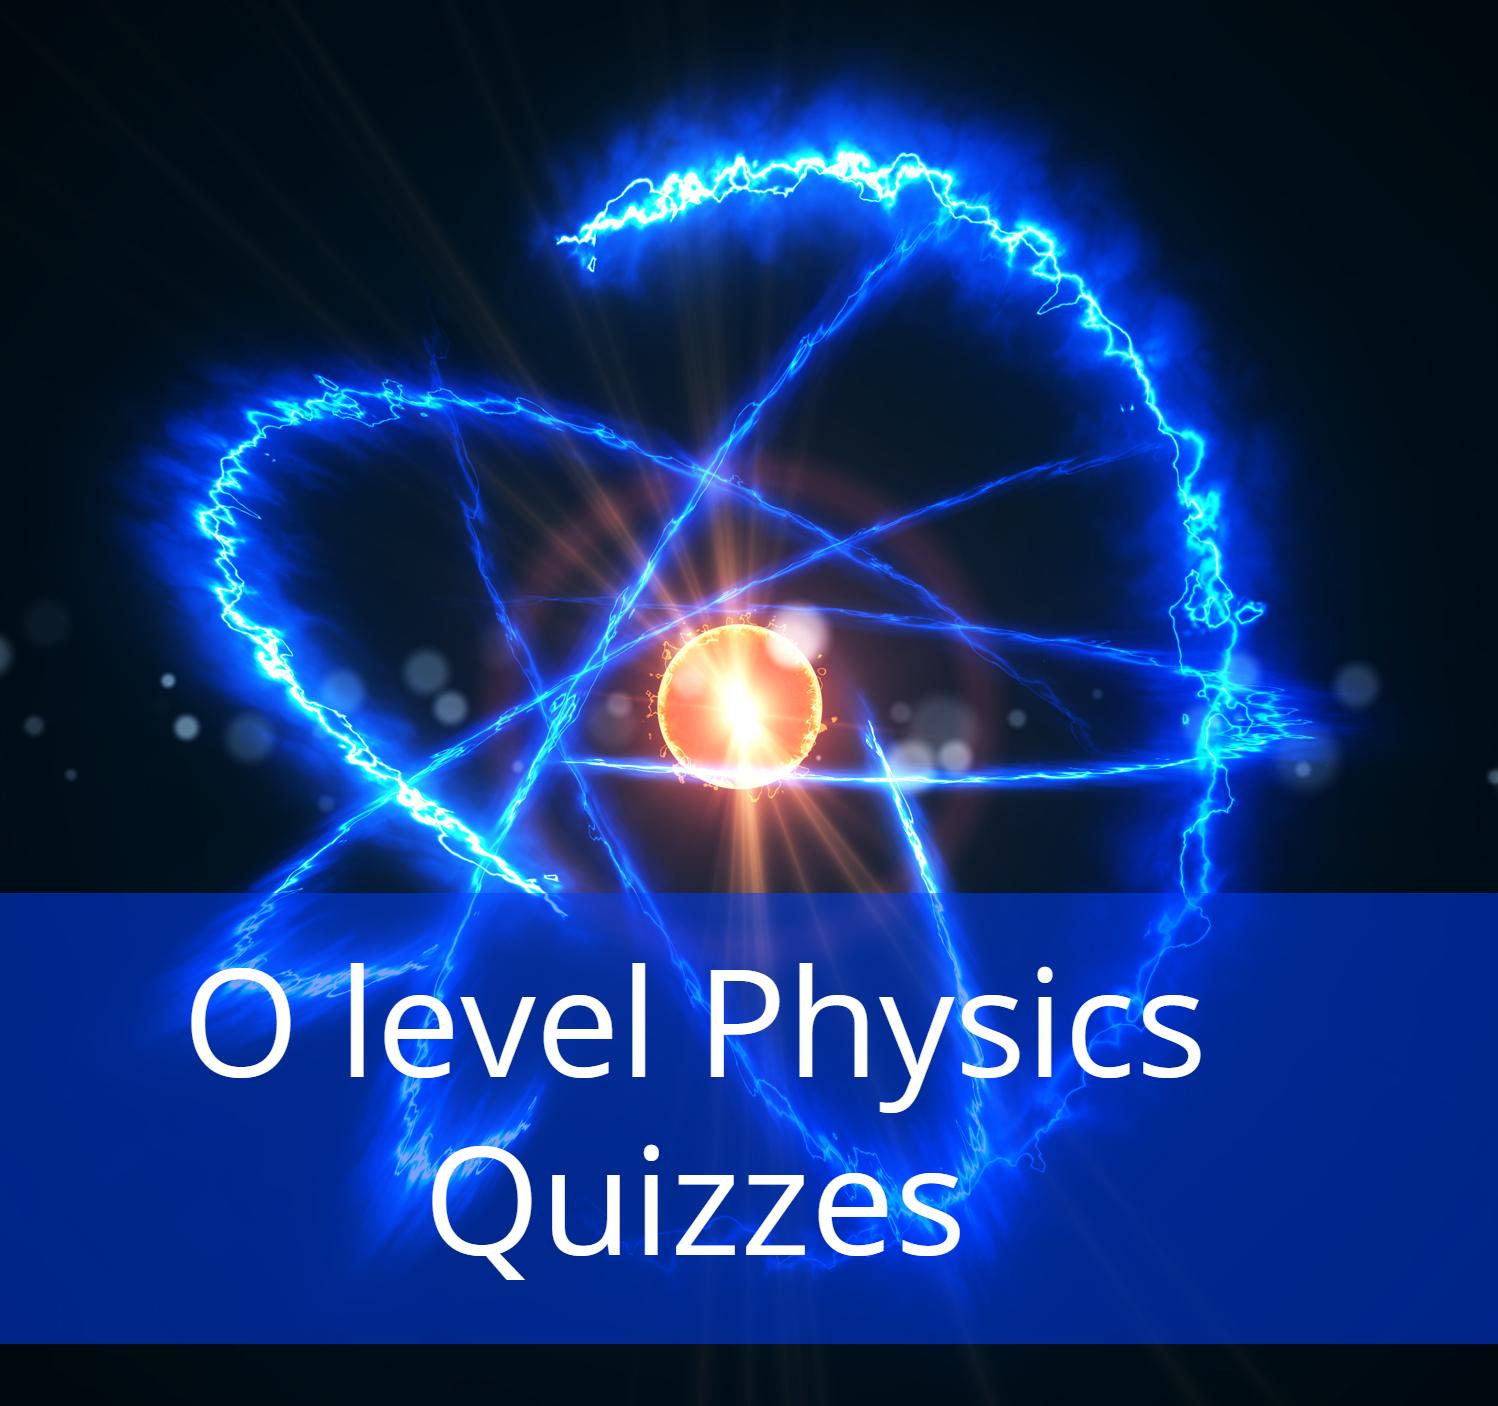 O level Physics Quizzes